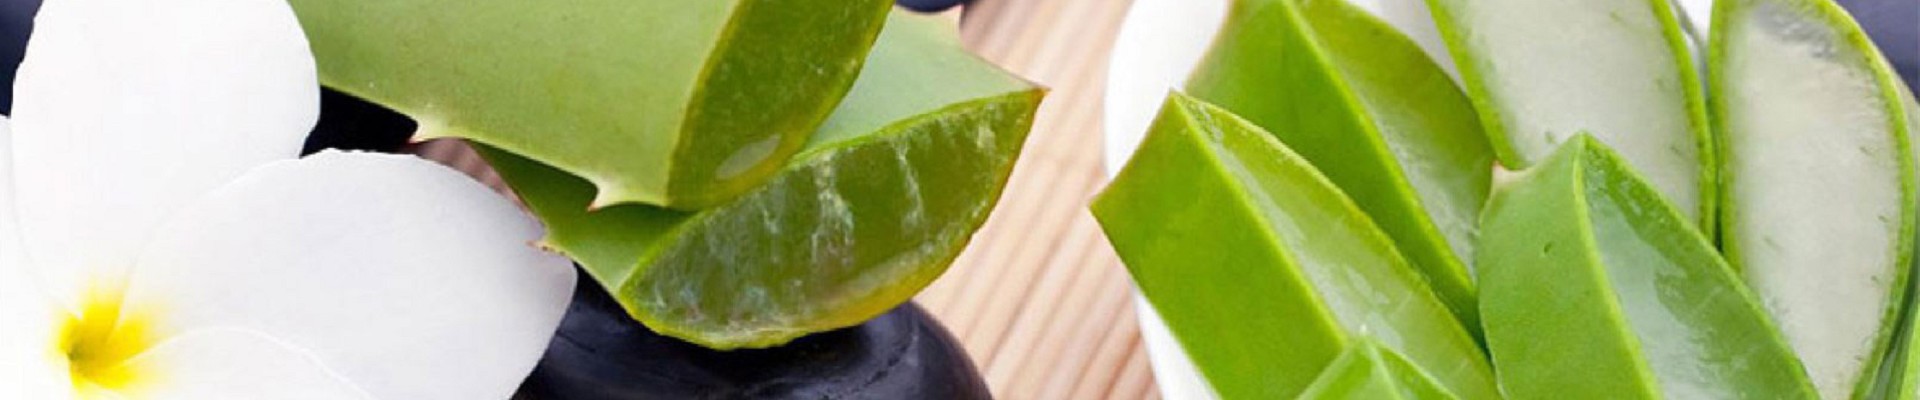 Vendita Foglie Fresche di Aloe Arborescens | Coltivazione Aloe Arborescens | Aloe Arborescens: Proprietà